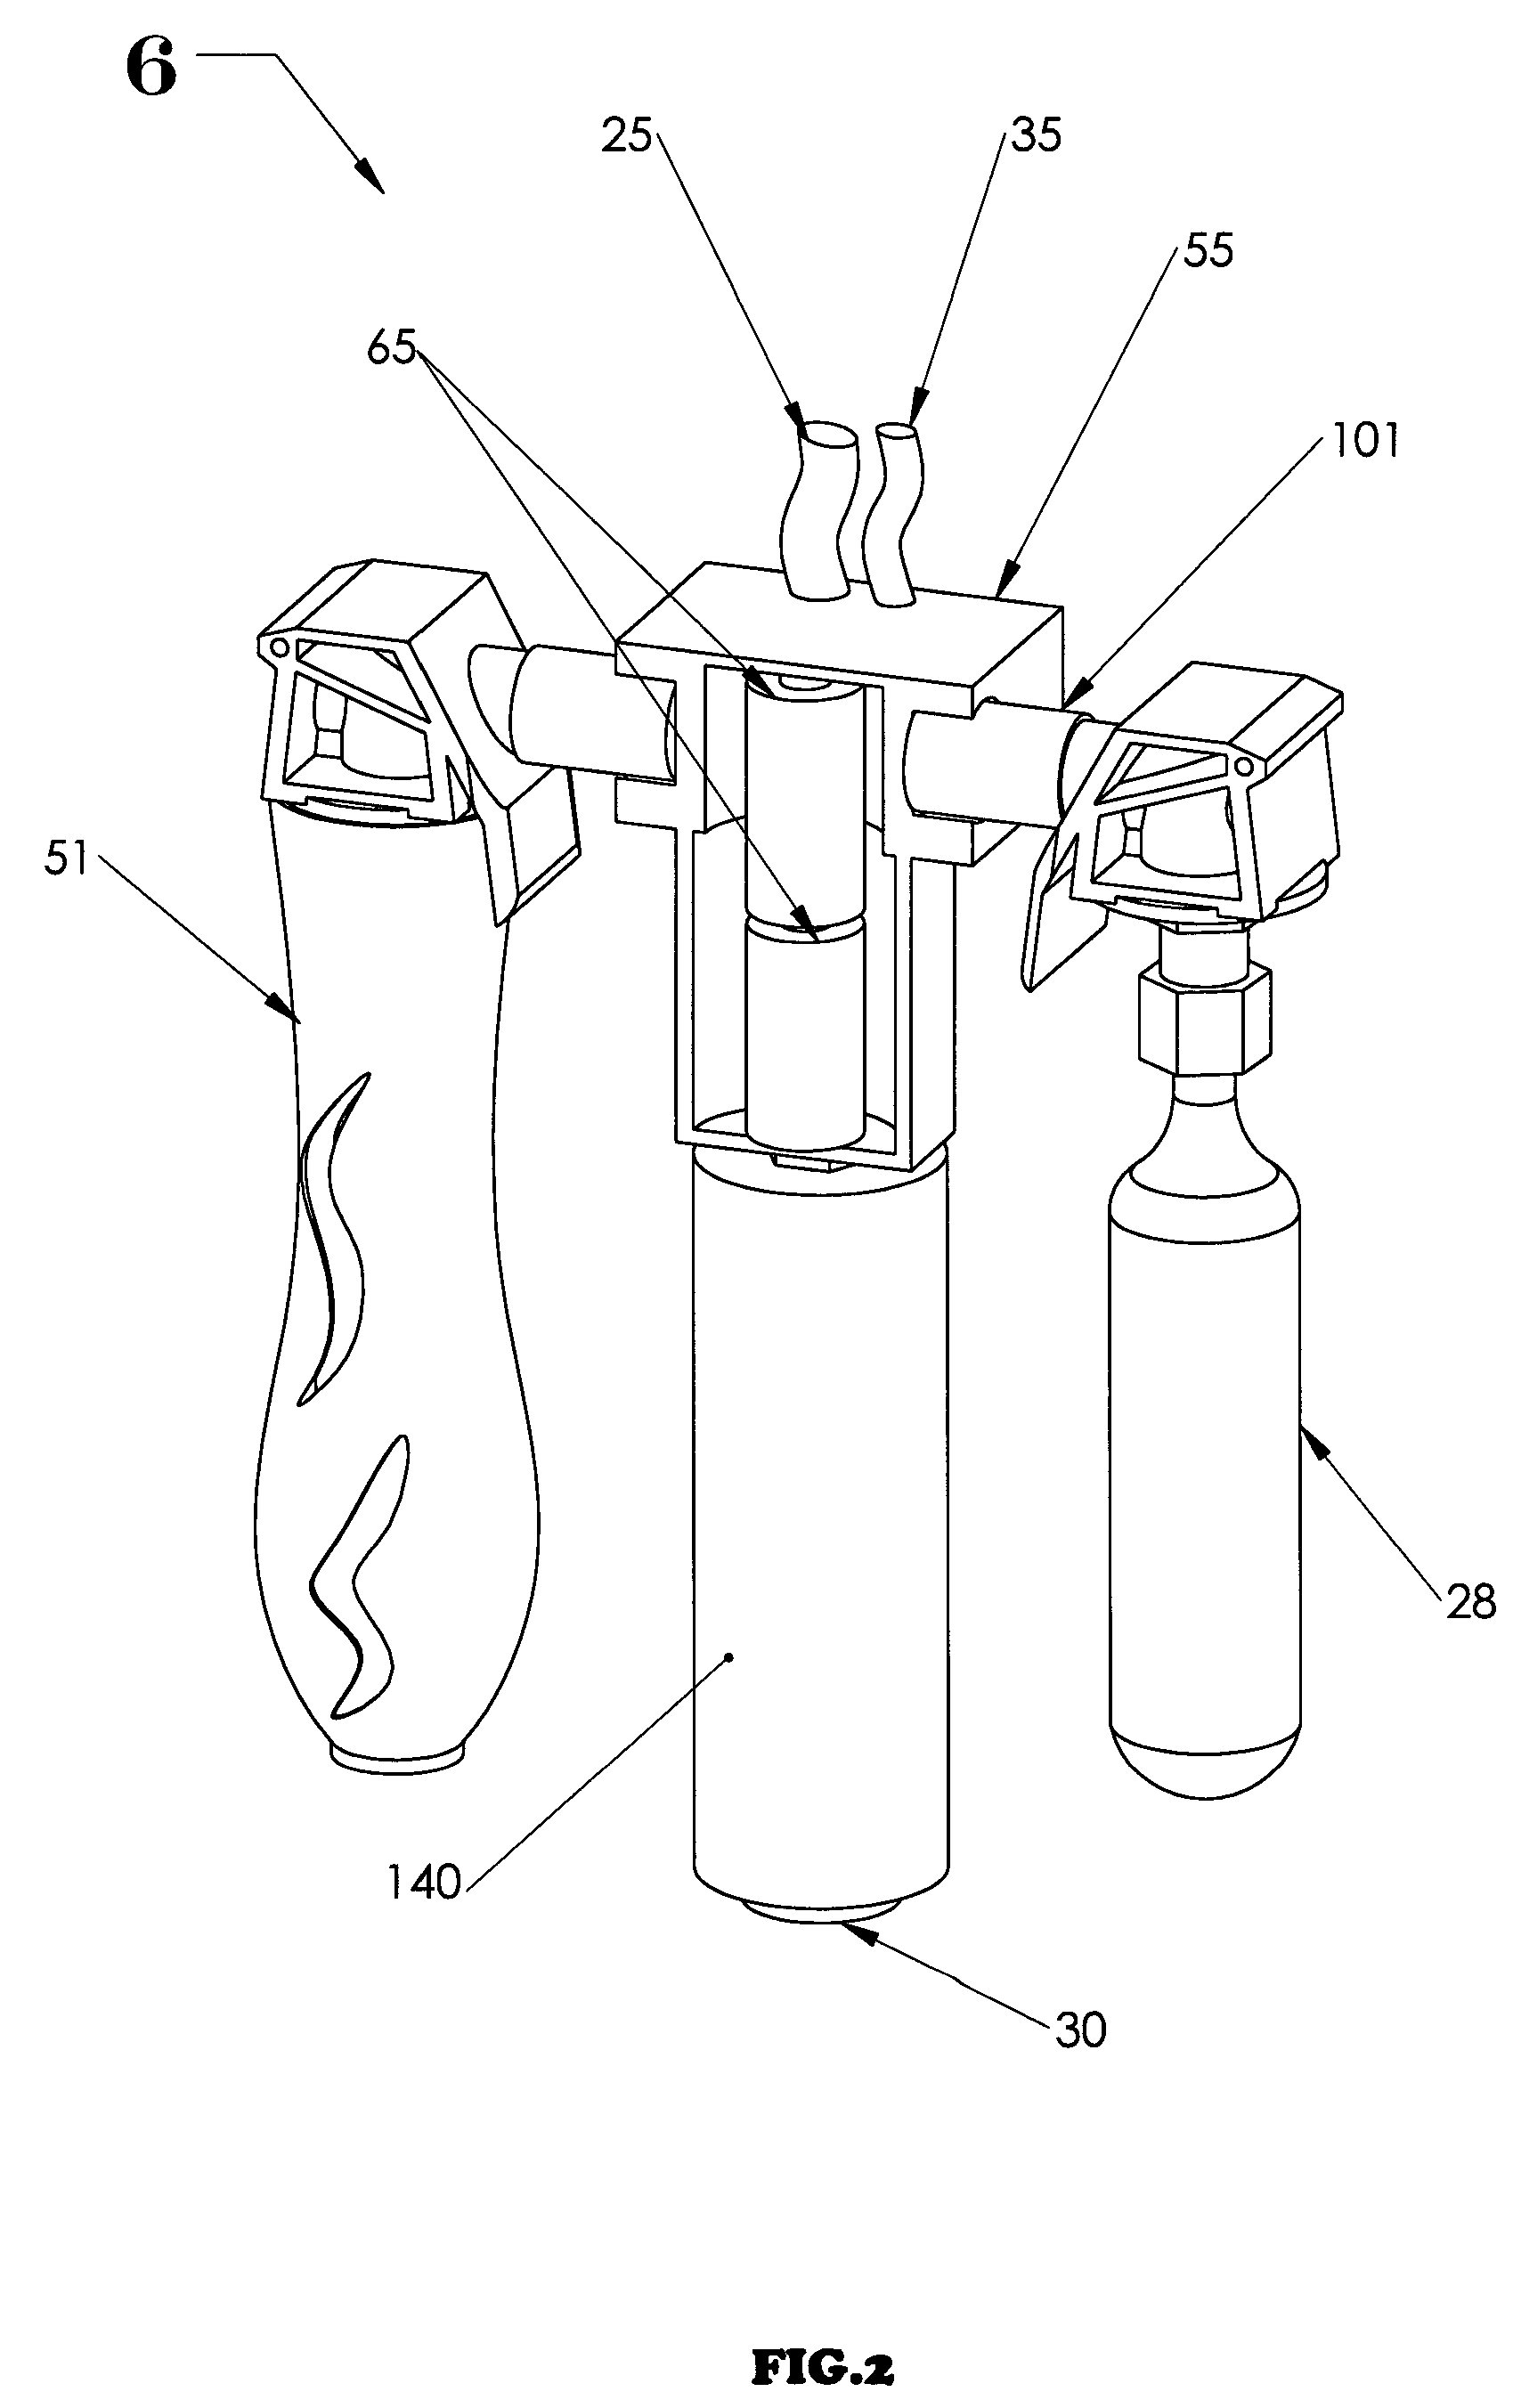 Portable evaporative snow apparatus